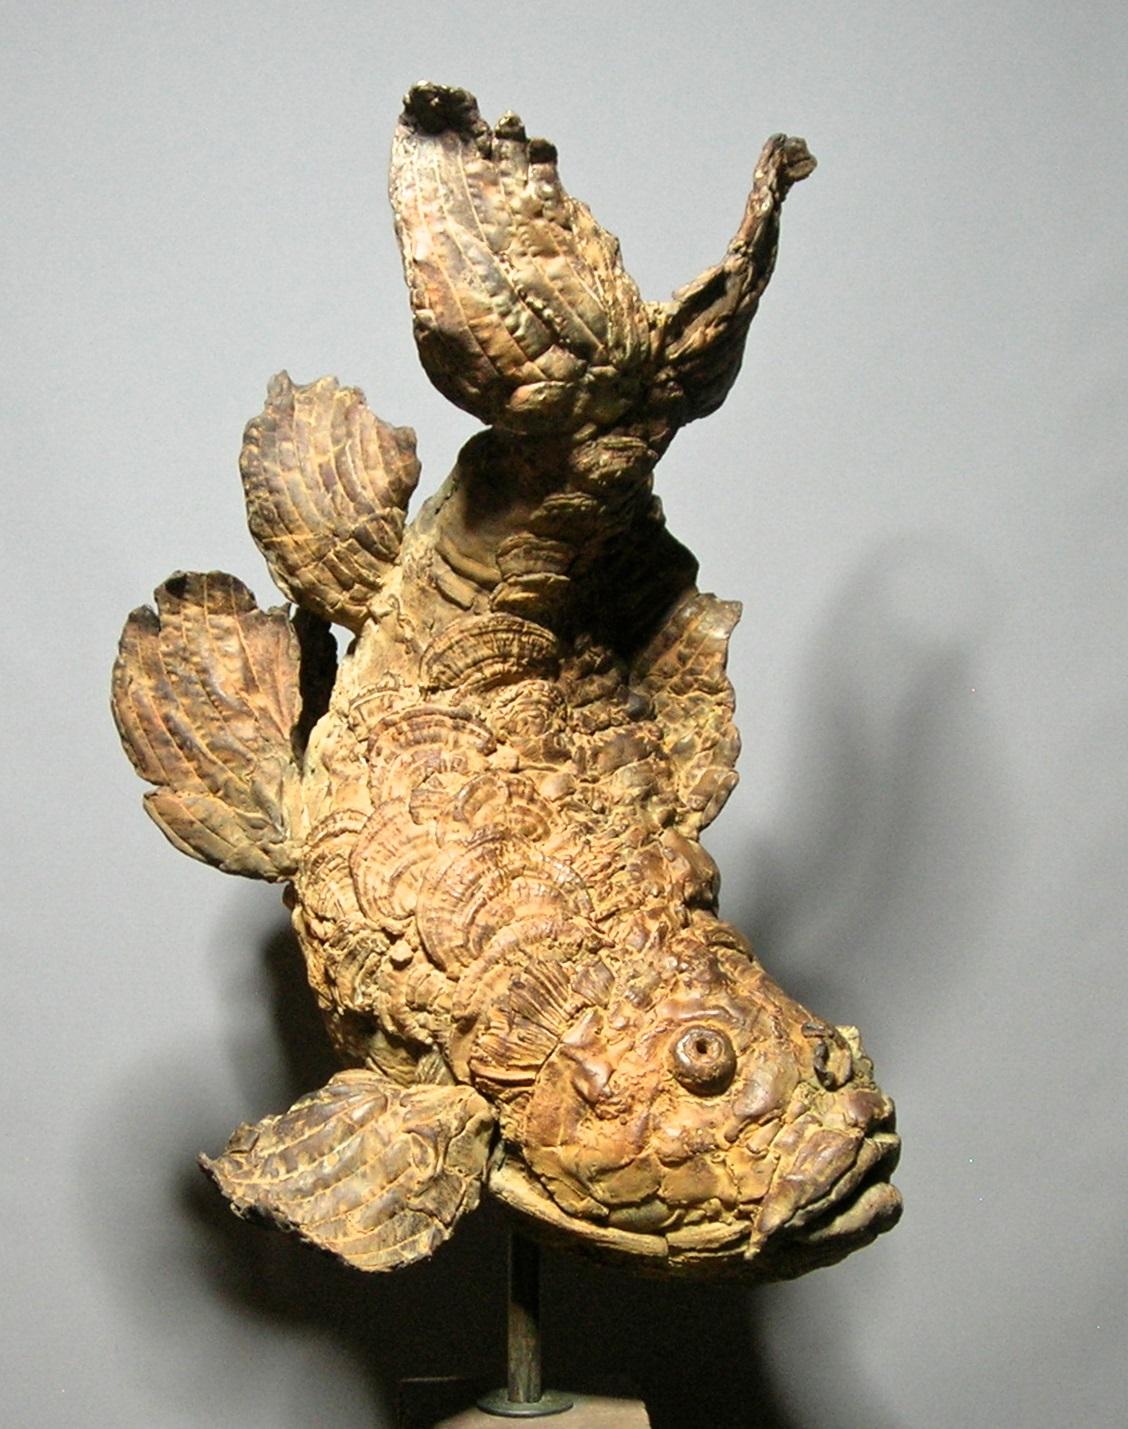 Pieter Vanden Daele Figurative Sculpture - Ferox Fierce Fish Bronze Sculpture on Stone 